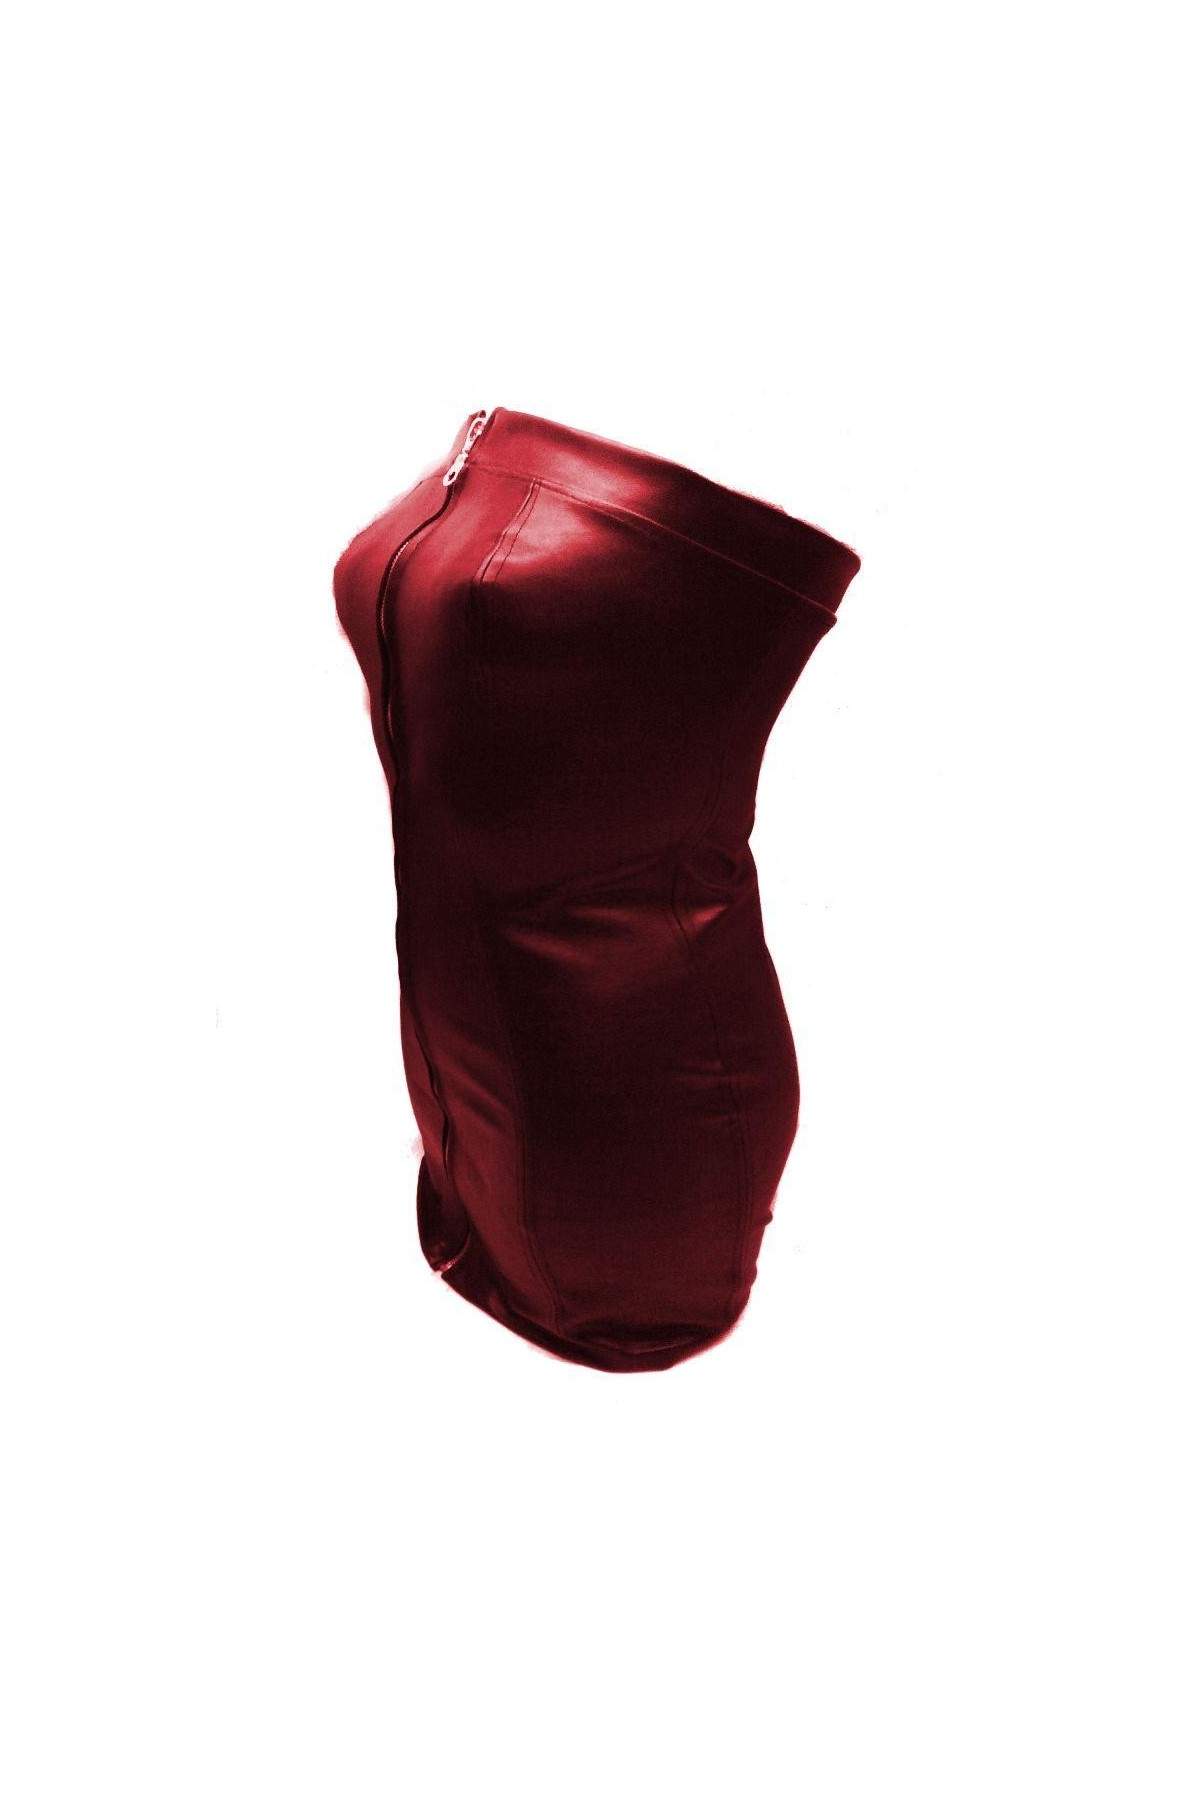 Designer leather dress red size L - XXL (44 - 52) 35,00 € - 